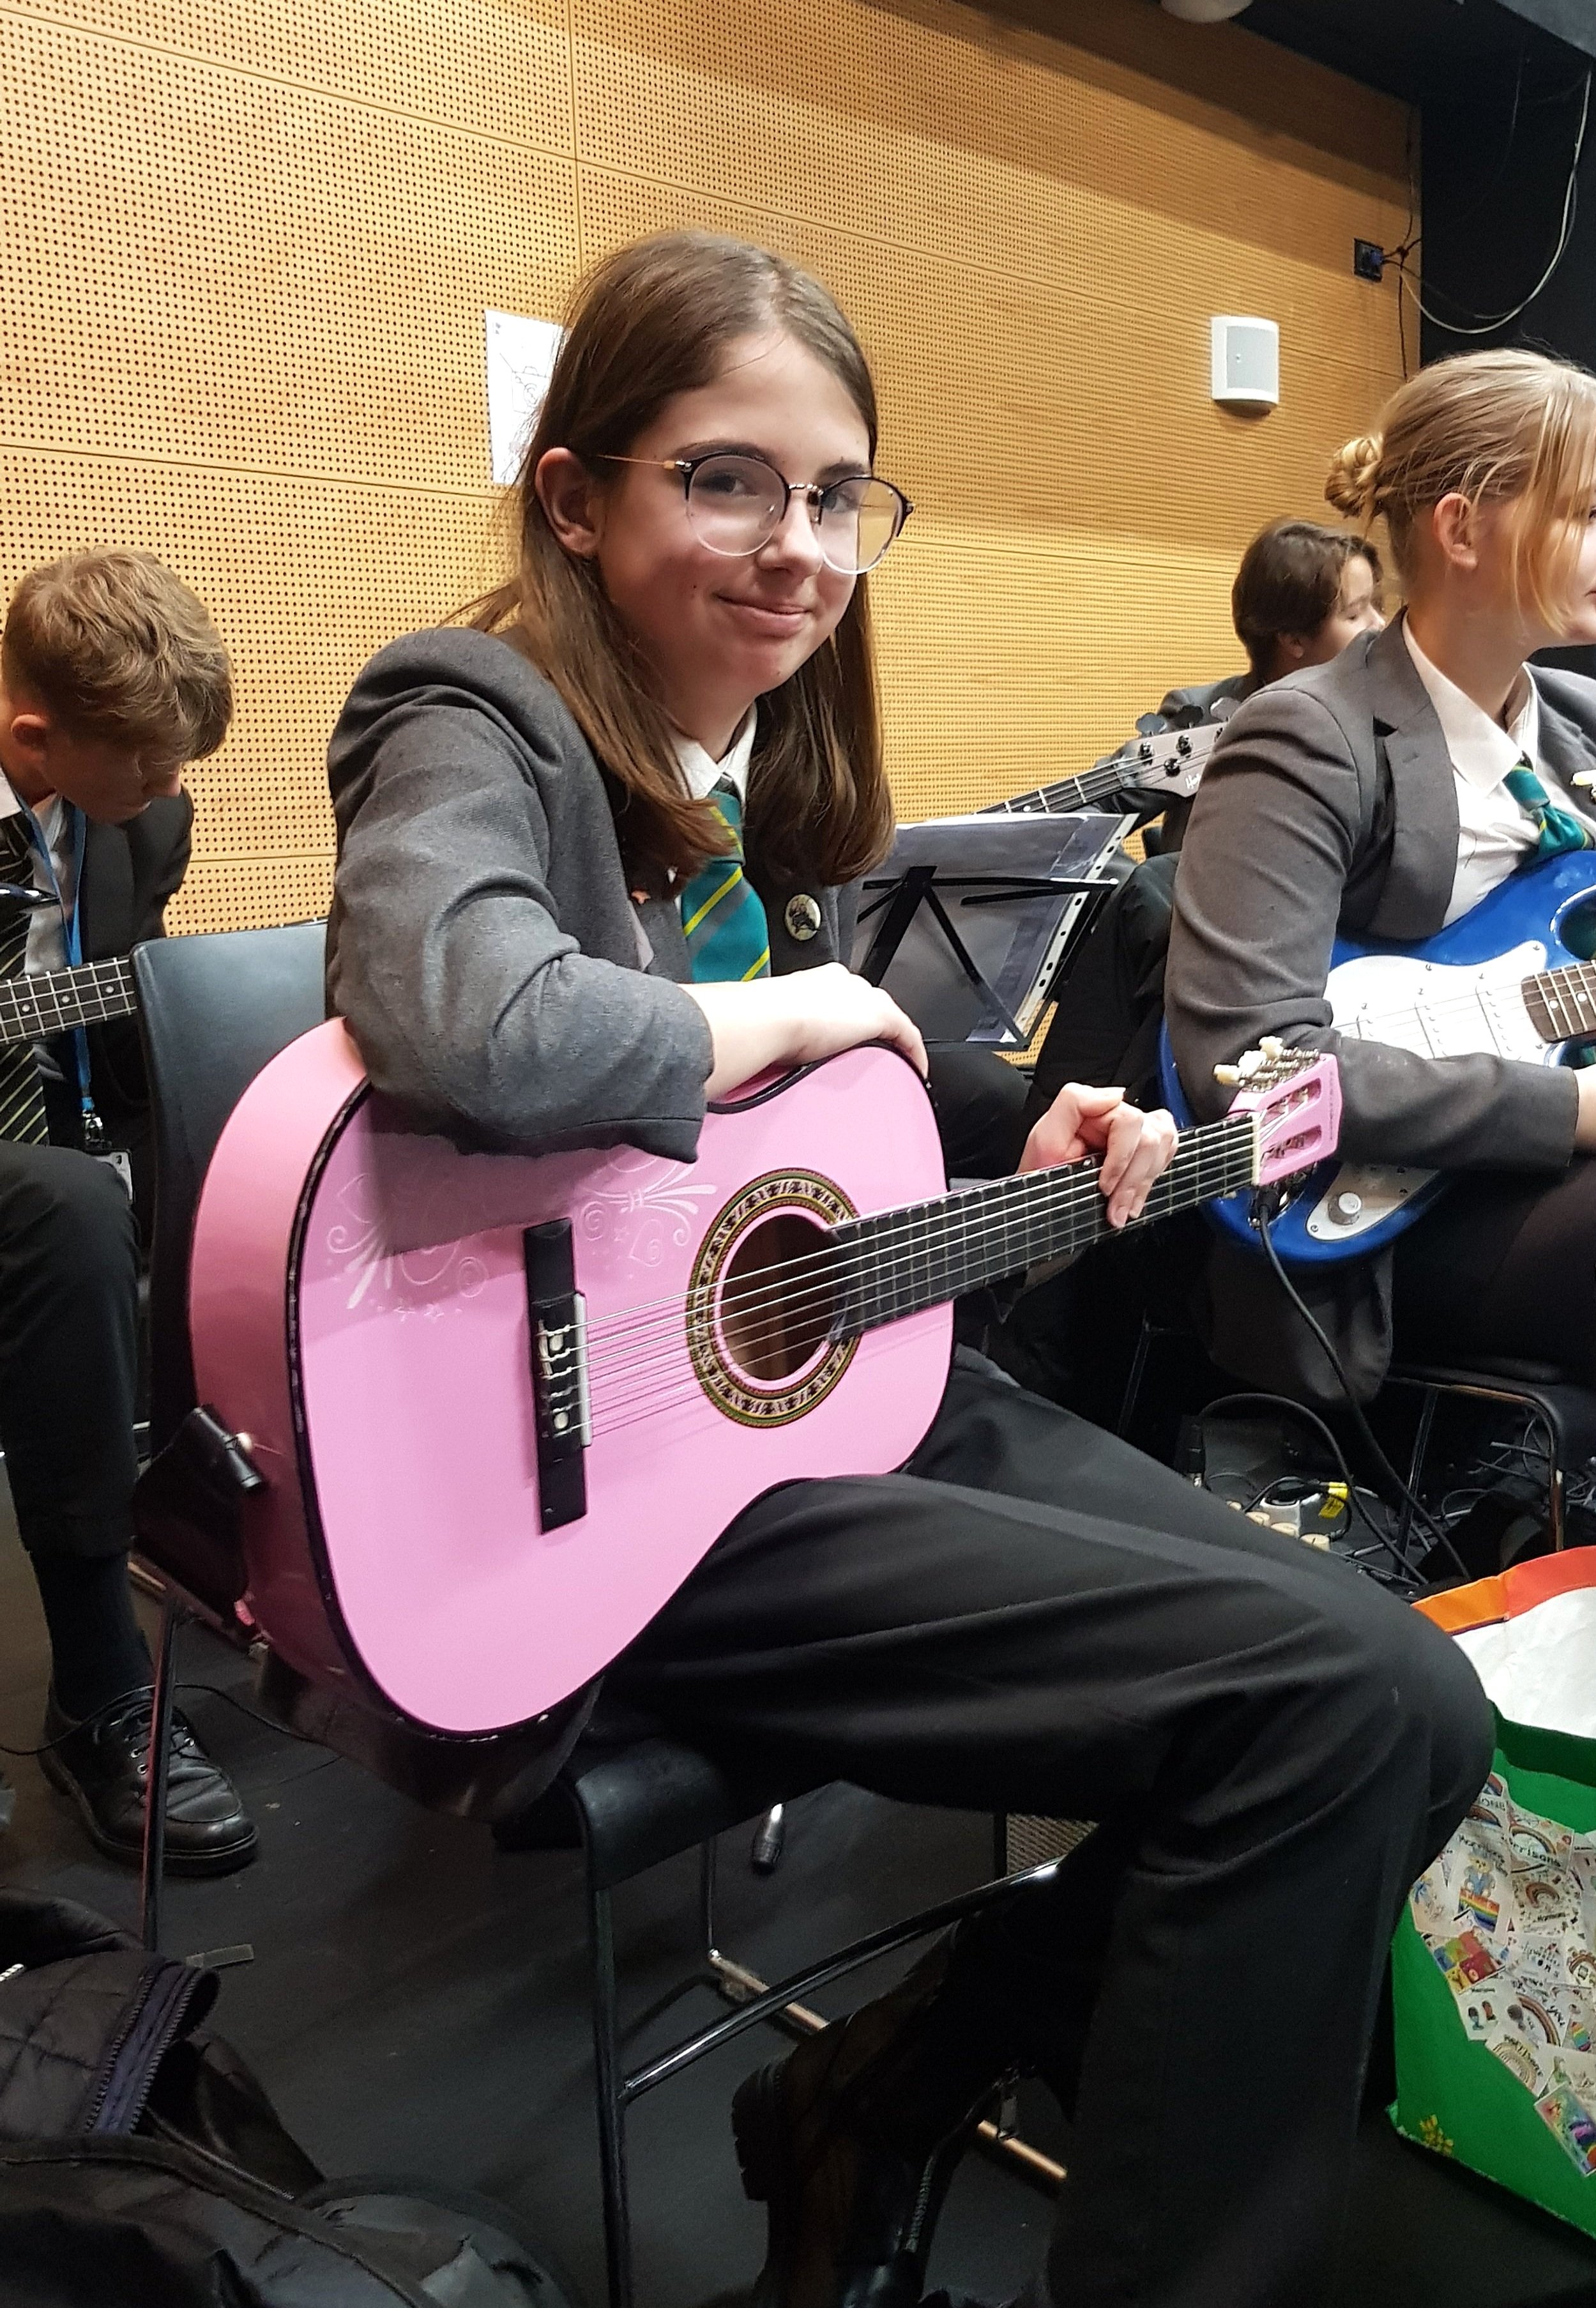 We do love a pink guitar